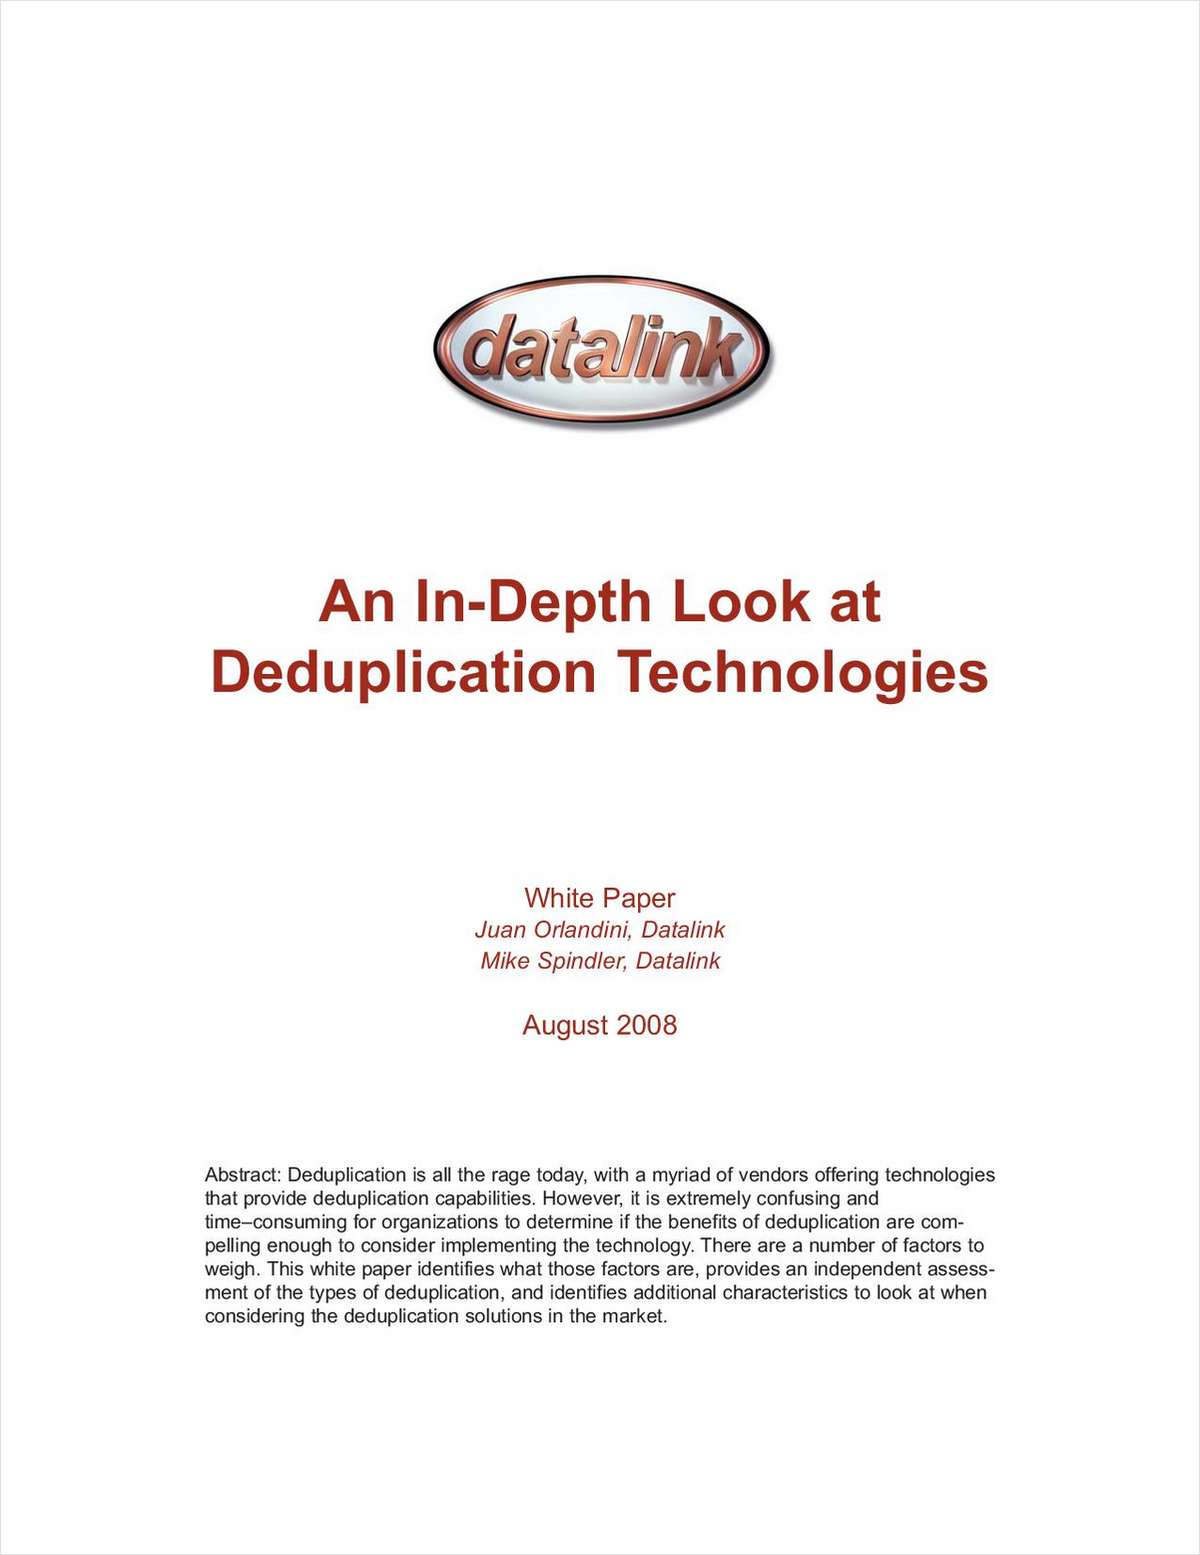 An In-Depth Look at Deduplication Technologies